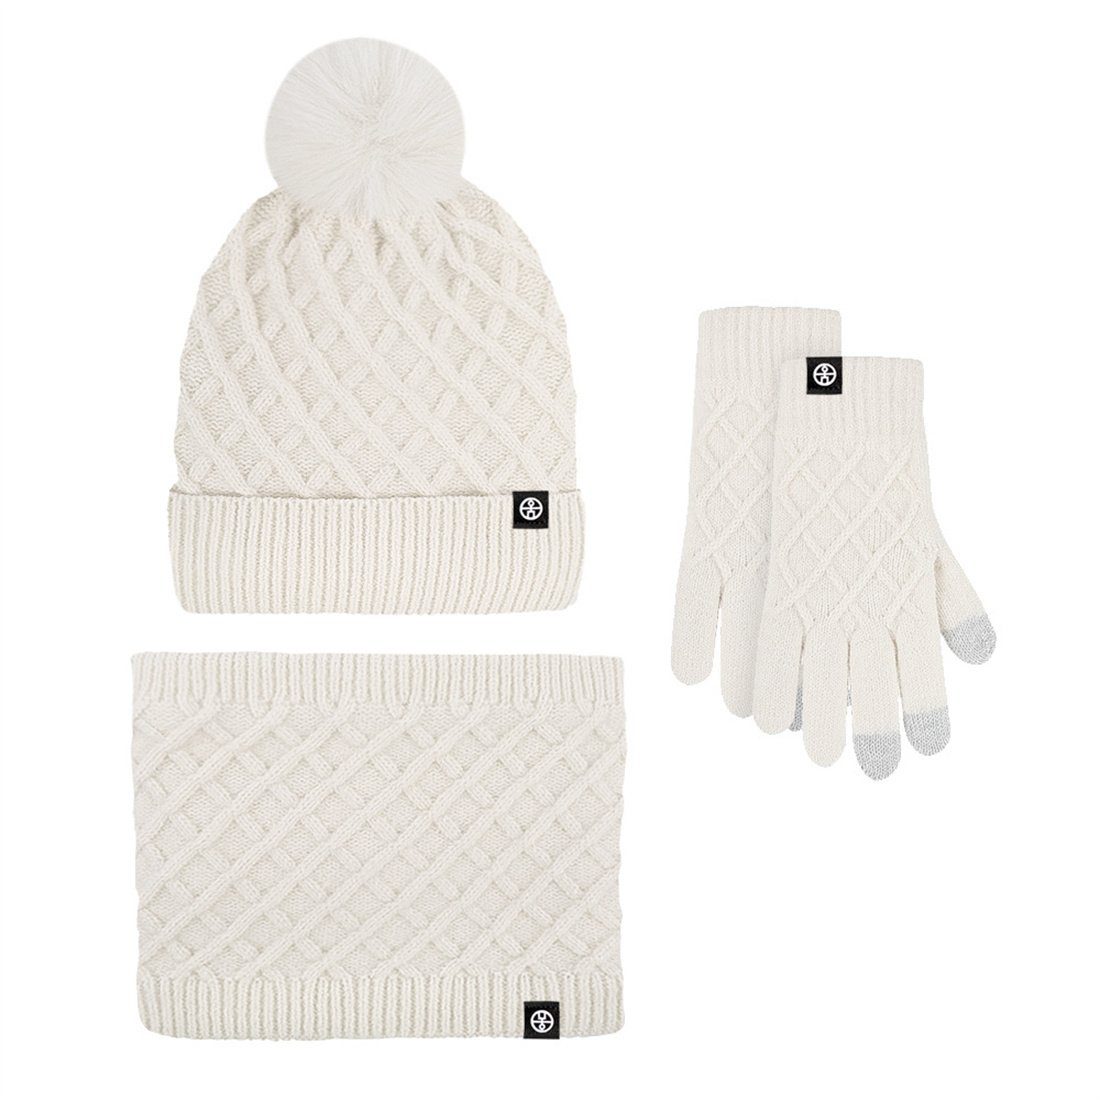 DÖRÖY Winter Schal Weiß Stück, Set Strickmütze 3 Warm Handschuhe Mütze Warm gepolstert